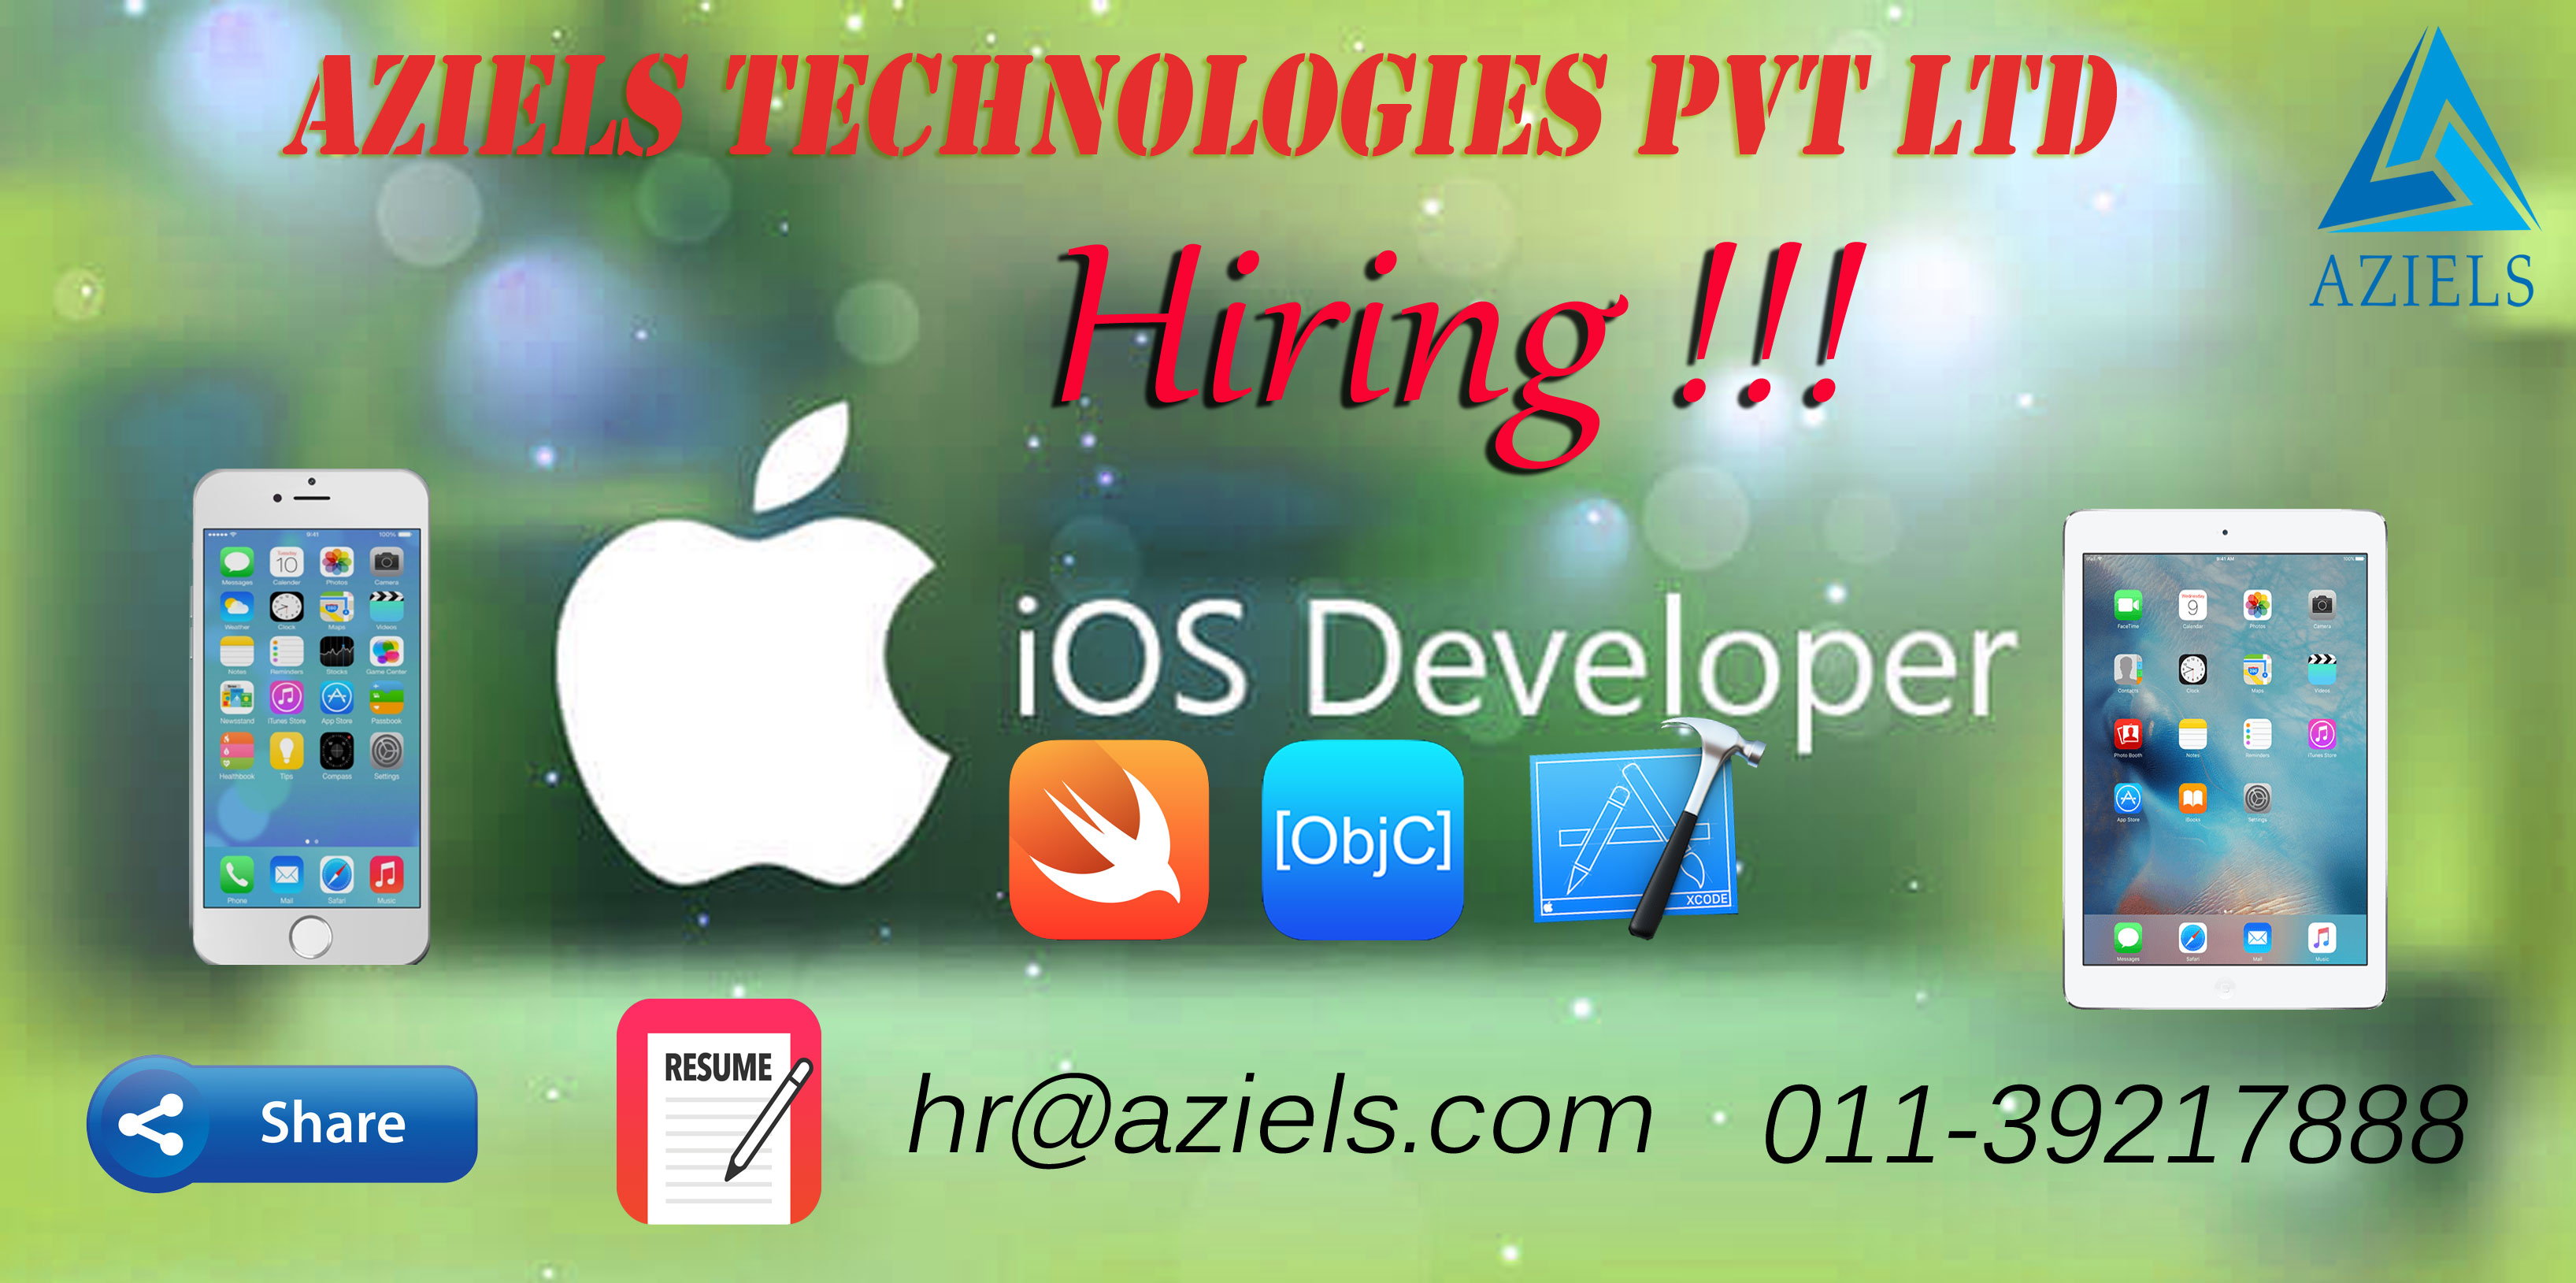 Aziels-Technolgies-hiring-Ios-Developers